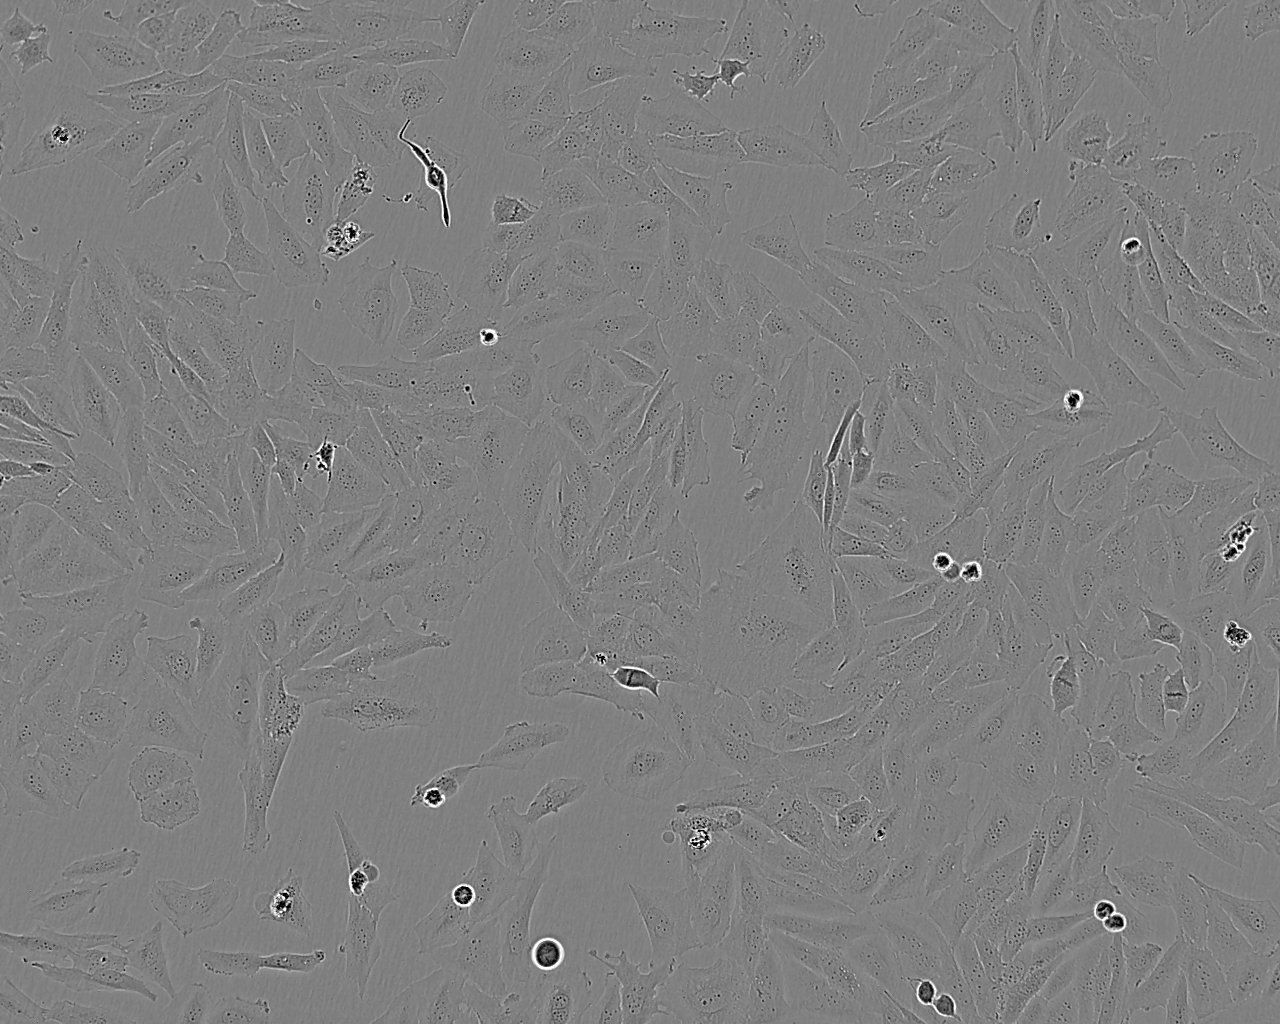 MEC-1 epithelioid cells人粘液表皮样癌细胞系